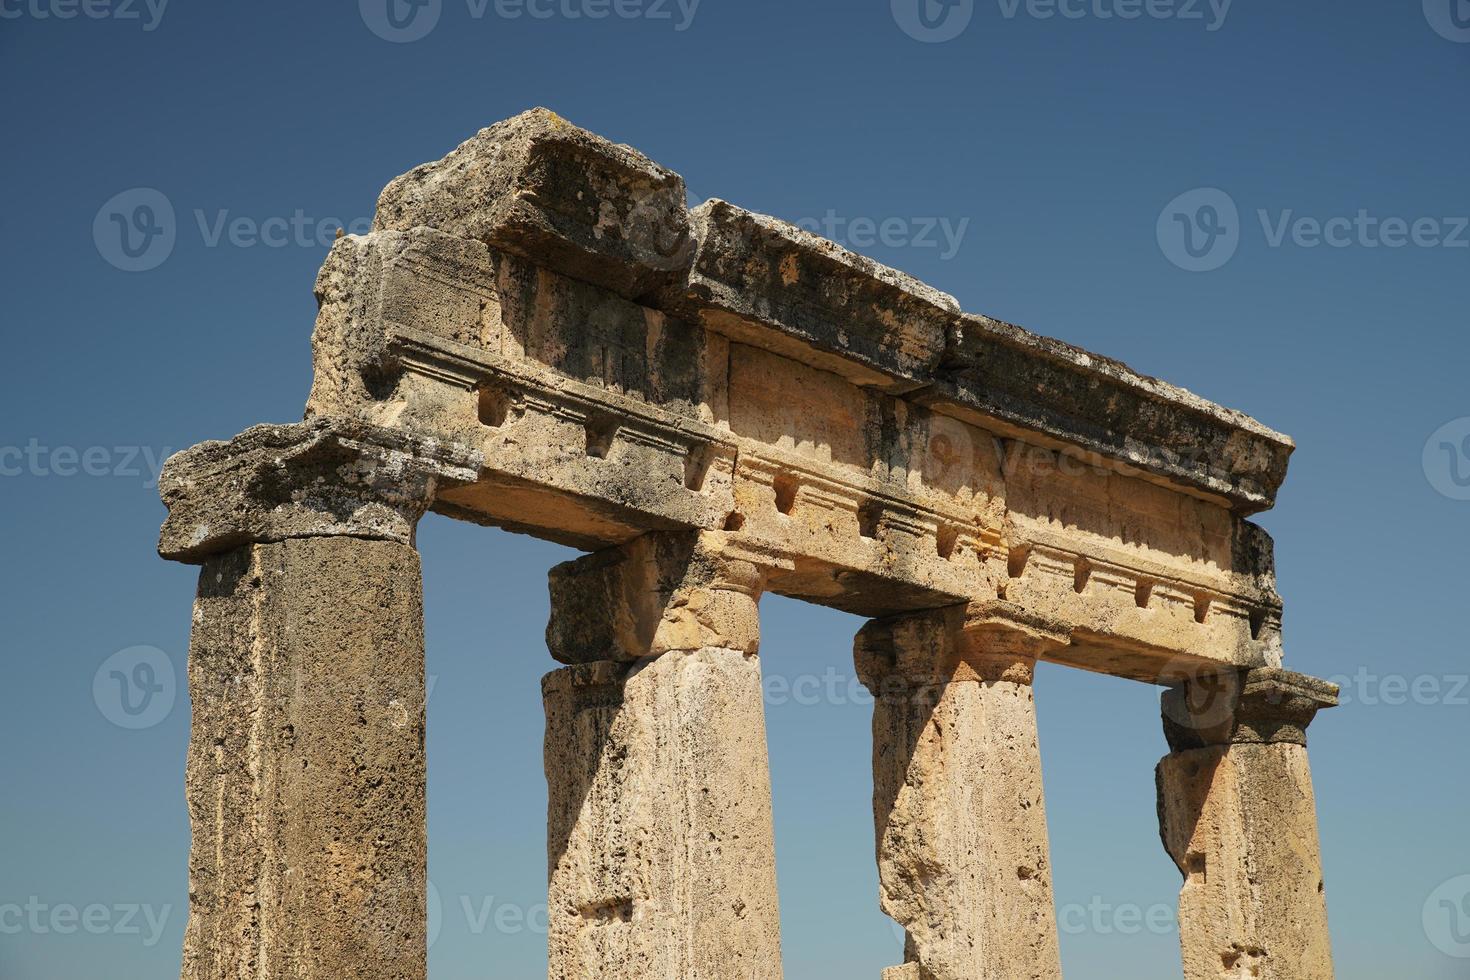 hierapolis oude stad in pamukkale, denizli, turkiye foto